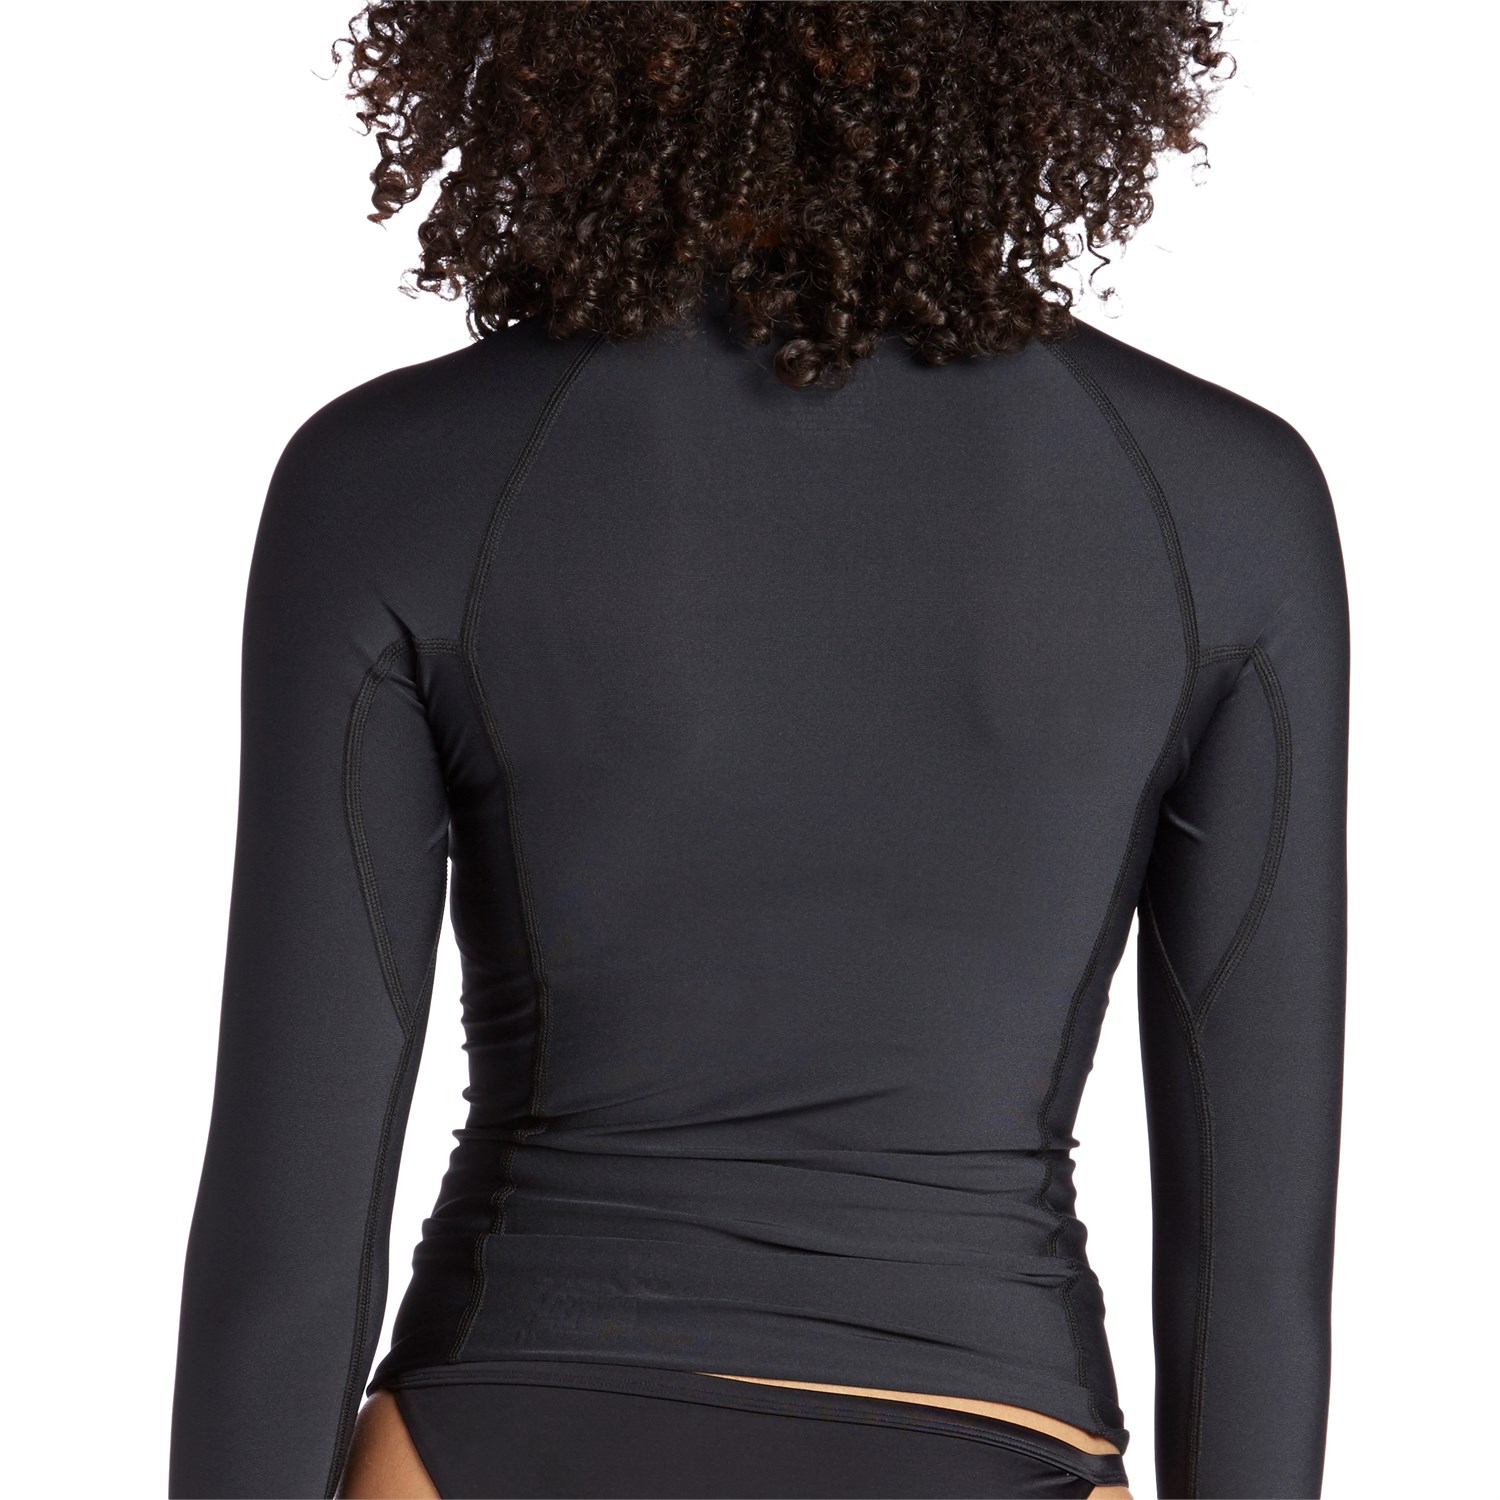 OP women fashion long sleeves rash guard set with black short